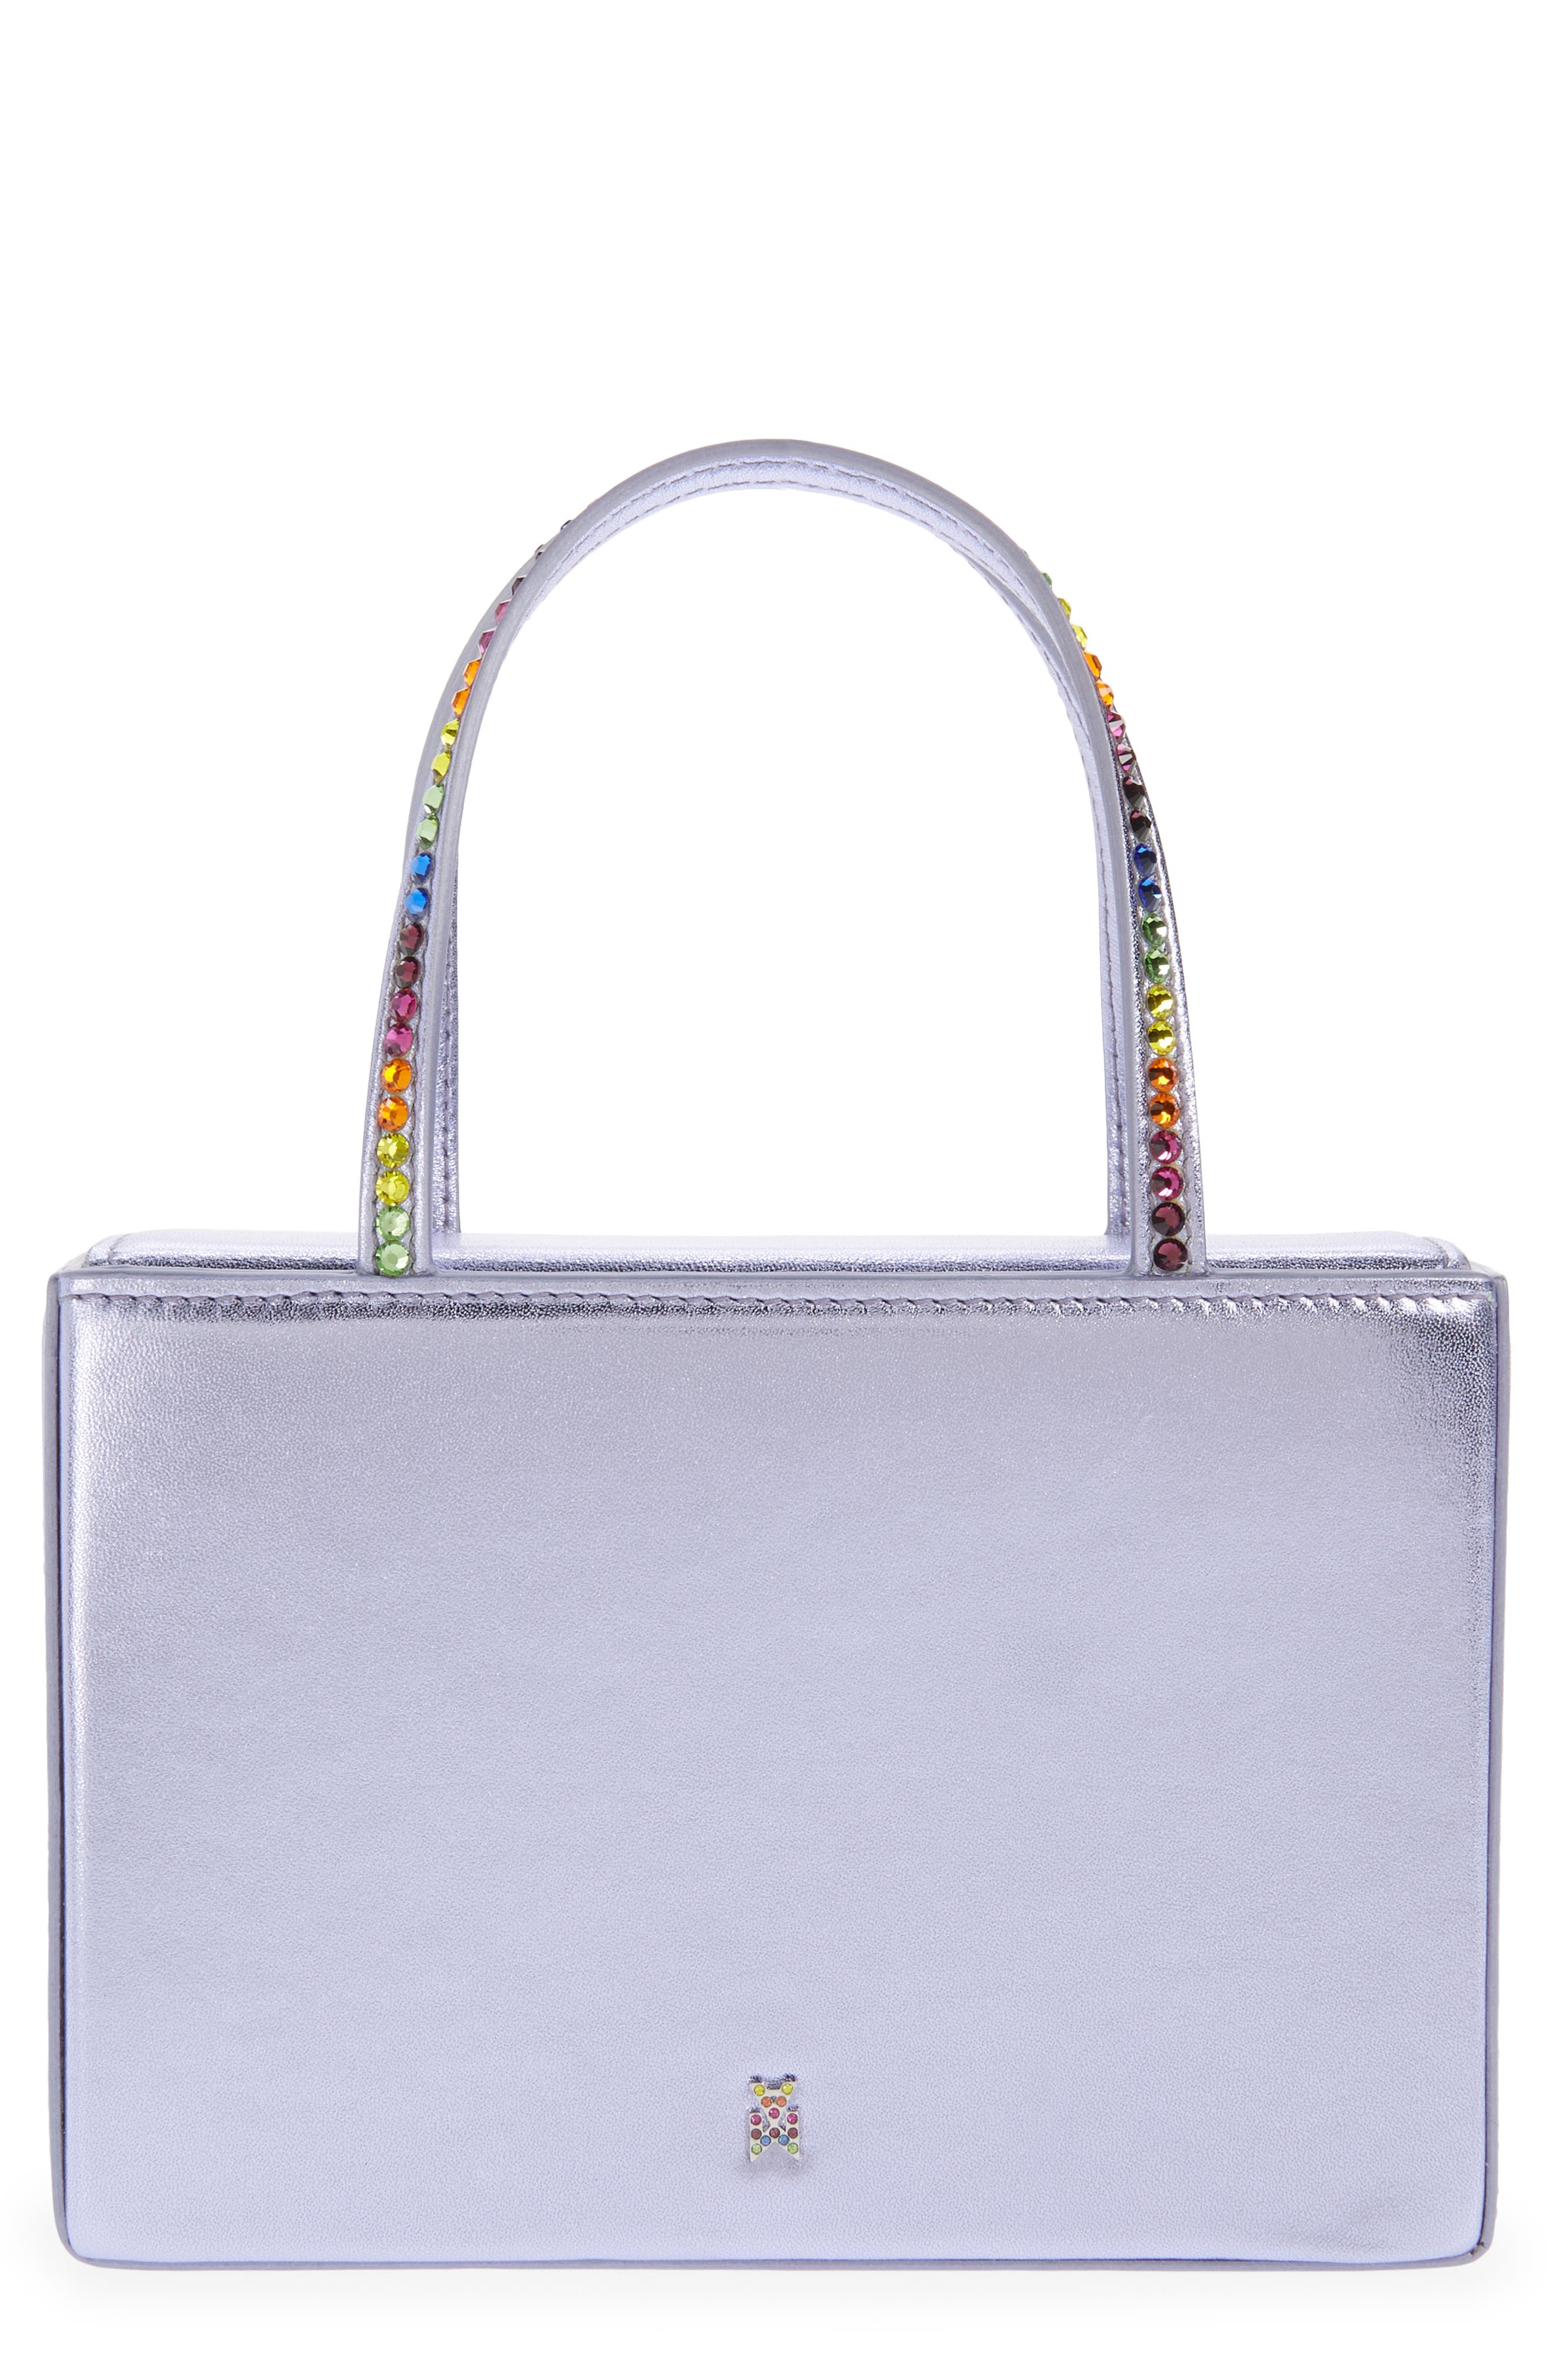 Amina Muaddi Gilda Rainbow Crystal Leather Top Handle Bag in Lavender Rainbow Crystals at Nordstrom